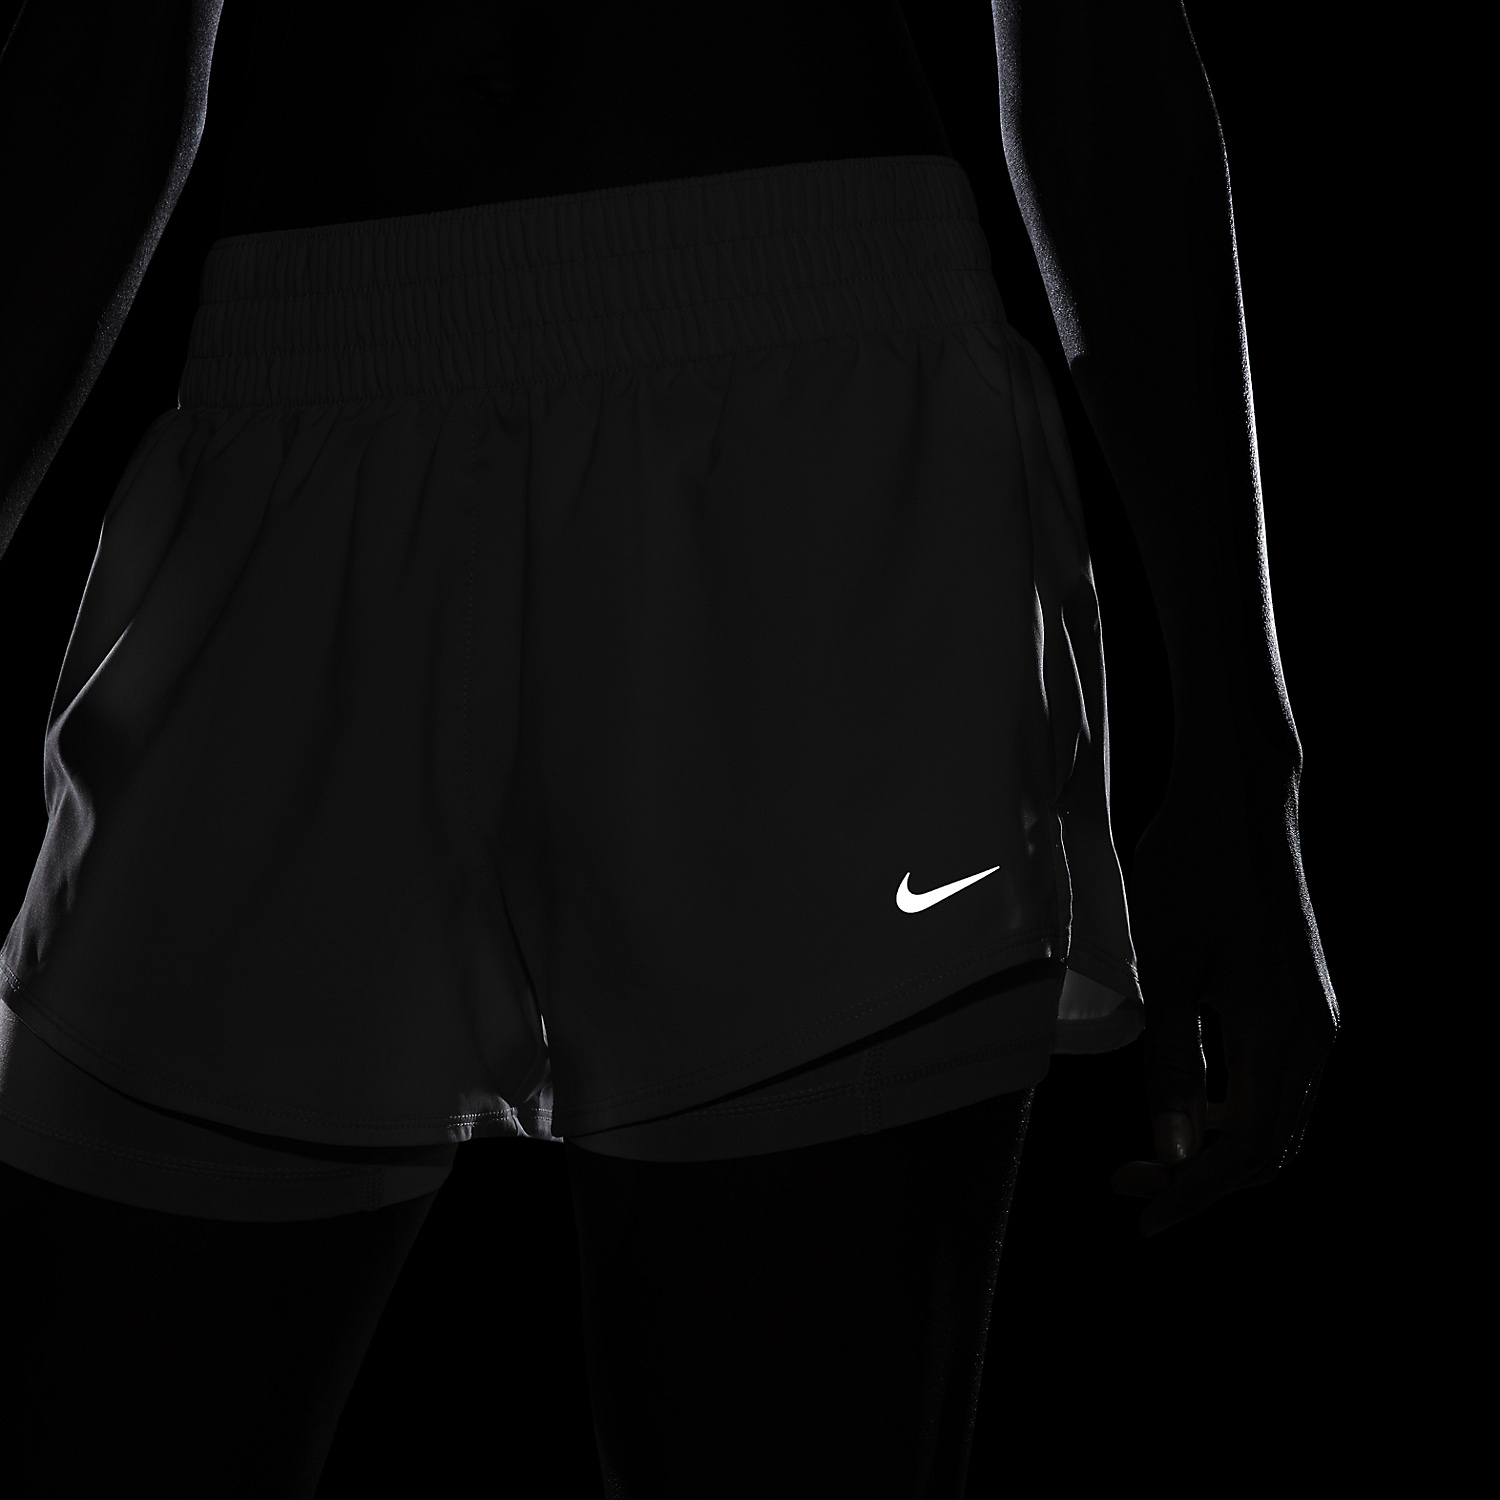 Nike One 2 in 1 3in Women's Tennis Shorts - Light Iron Ore